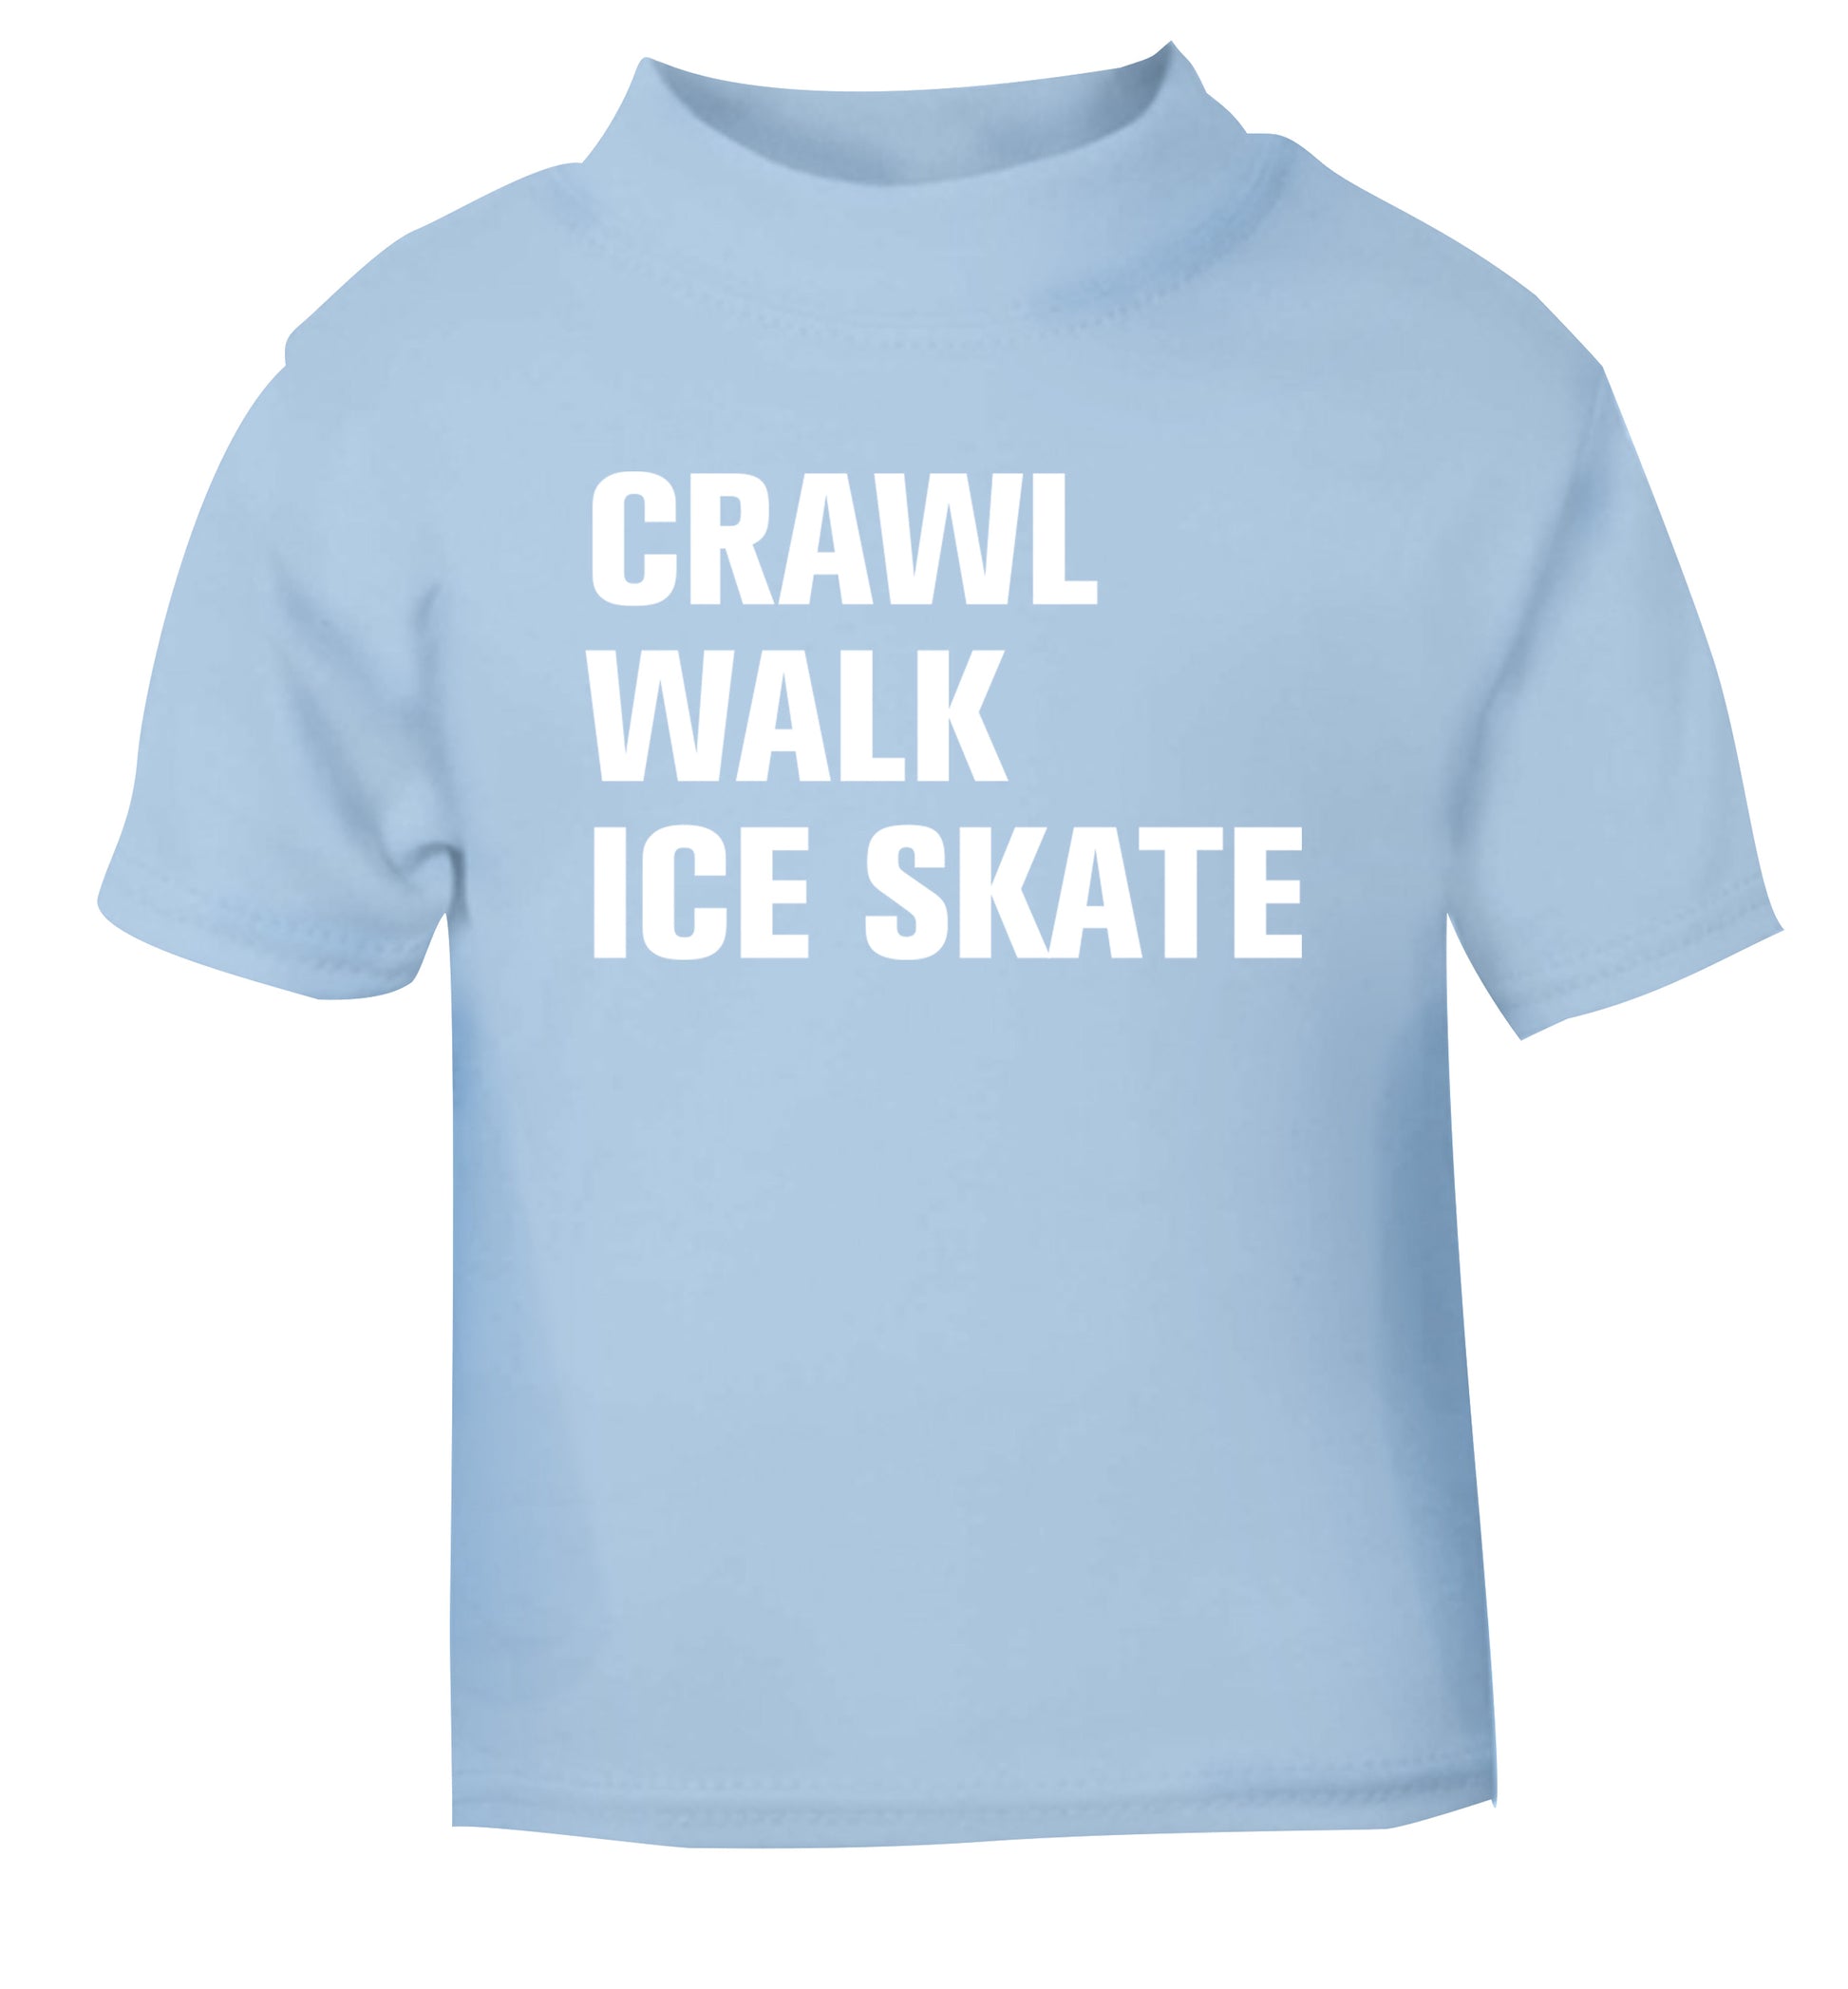 Crawl walk ice skate light blue Baby Toddler Tshirt 2 Years